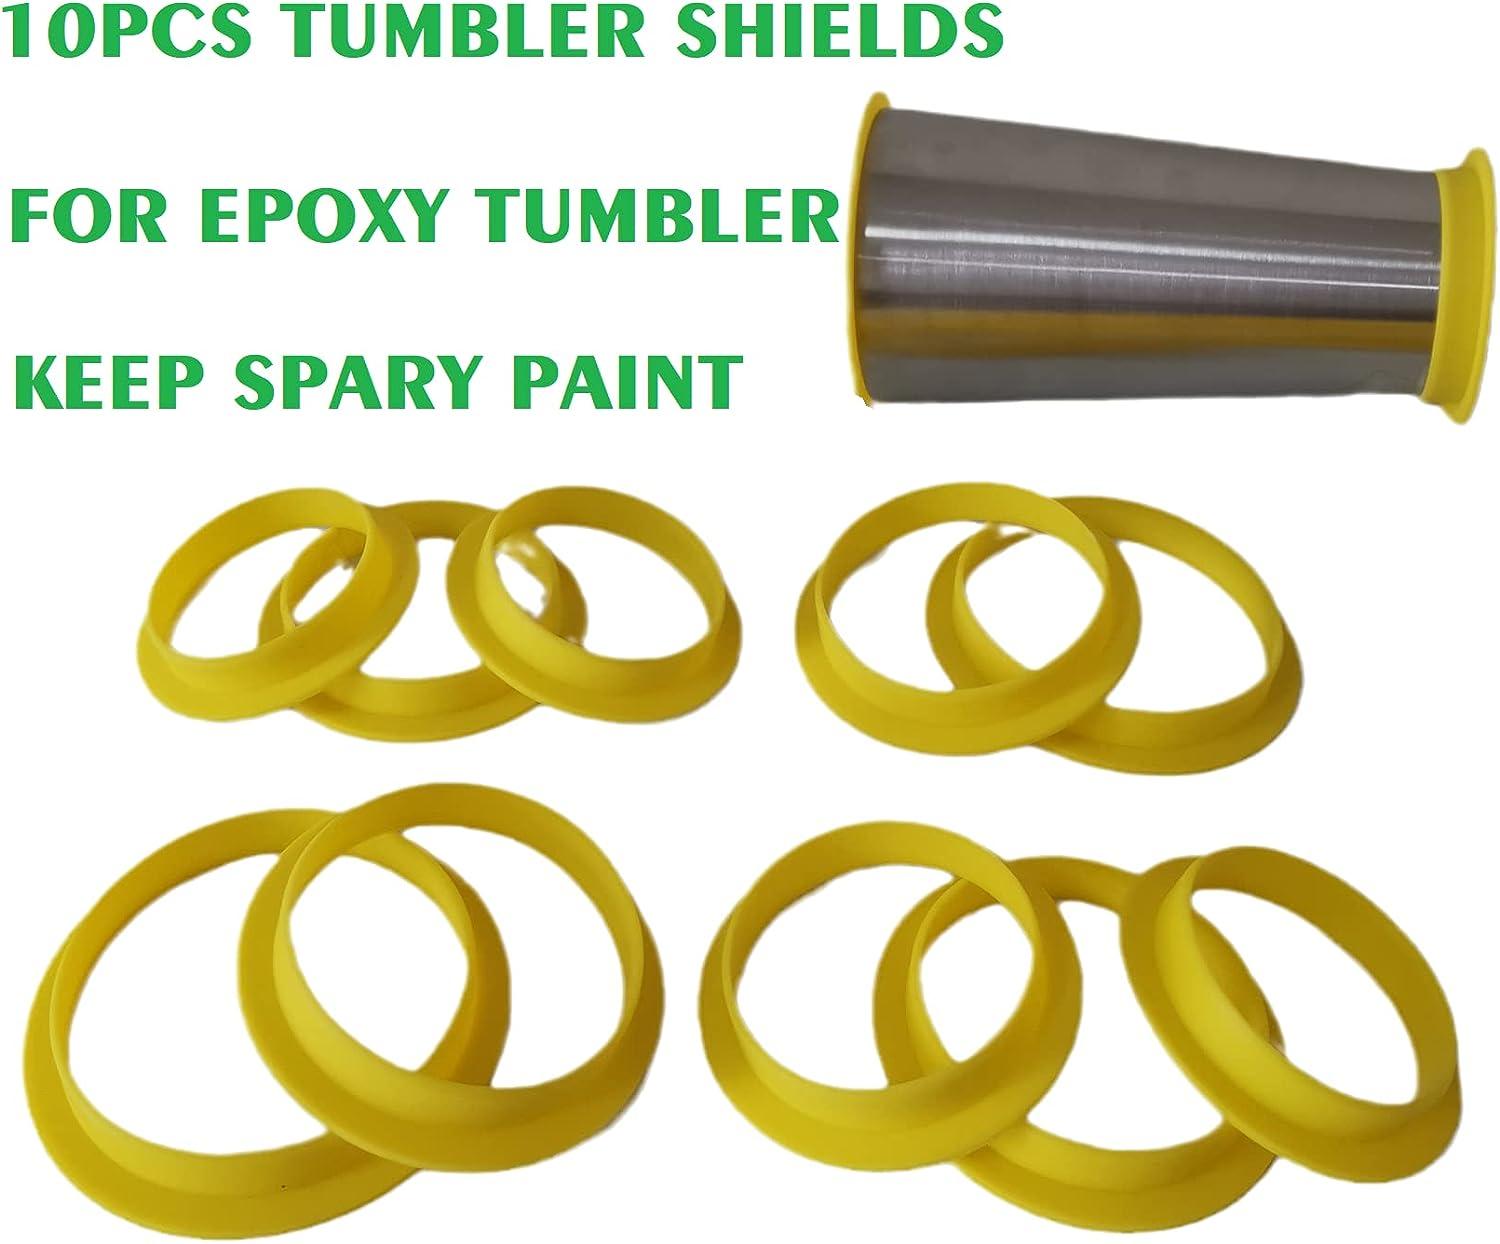 Tumbler Shields for Epoxy Rims, Tumbler Making Supplies, Tumbler Turner  Silicone Insert, Paint Spray Shield 7 Sizes purple